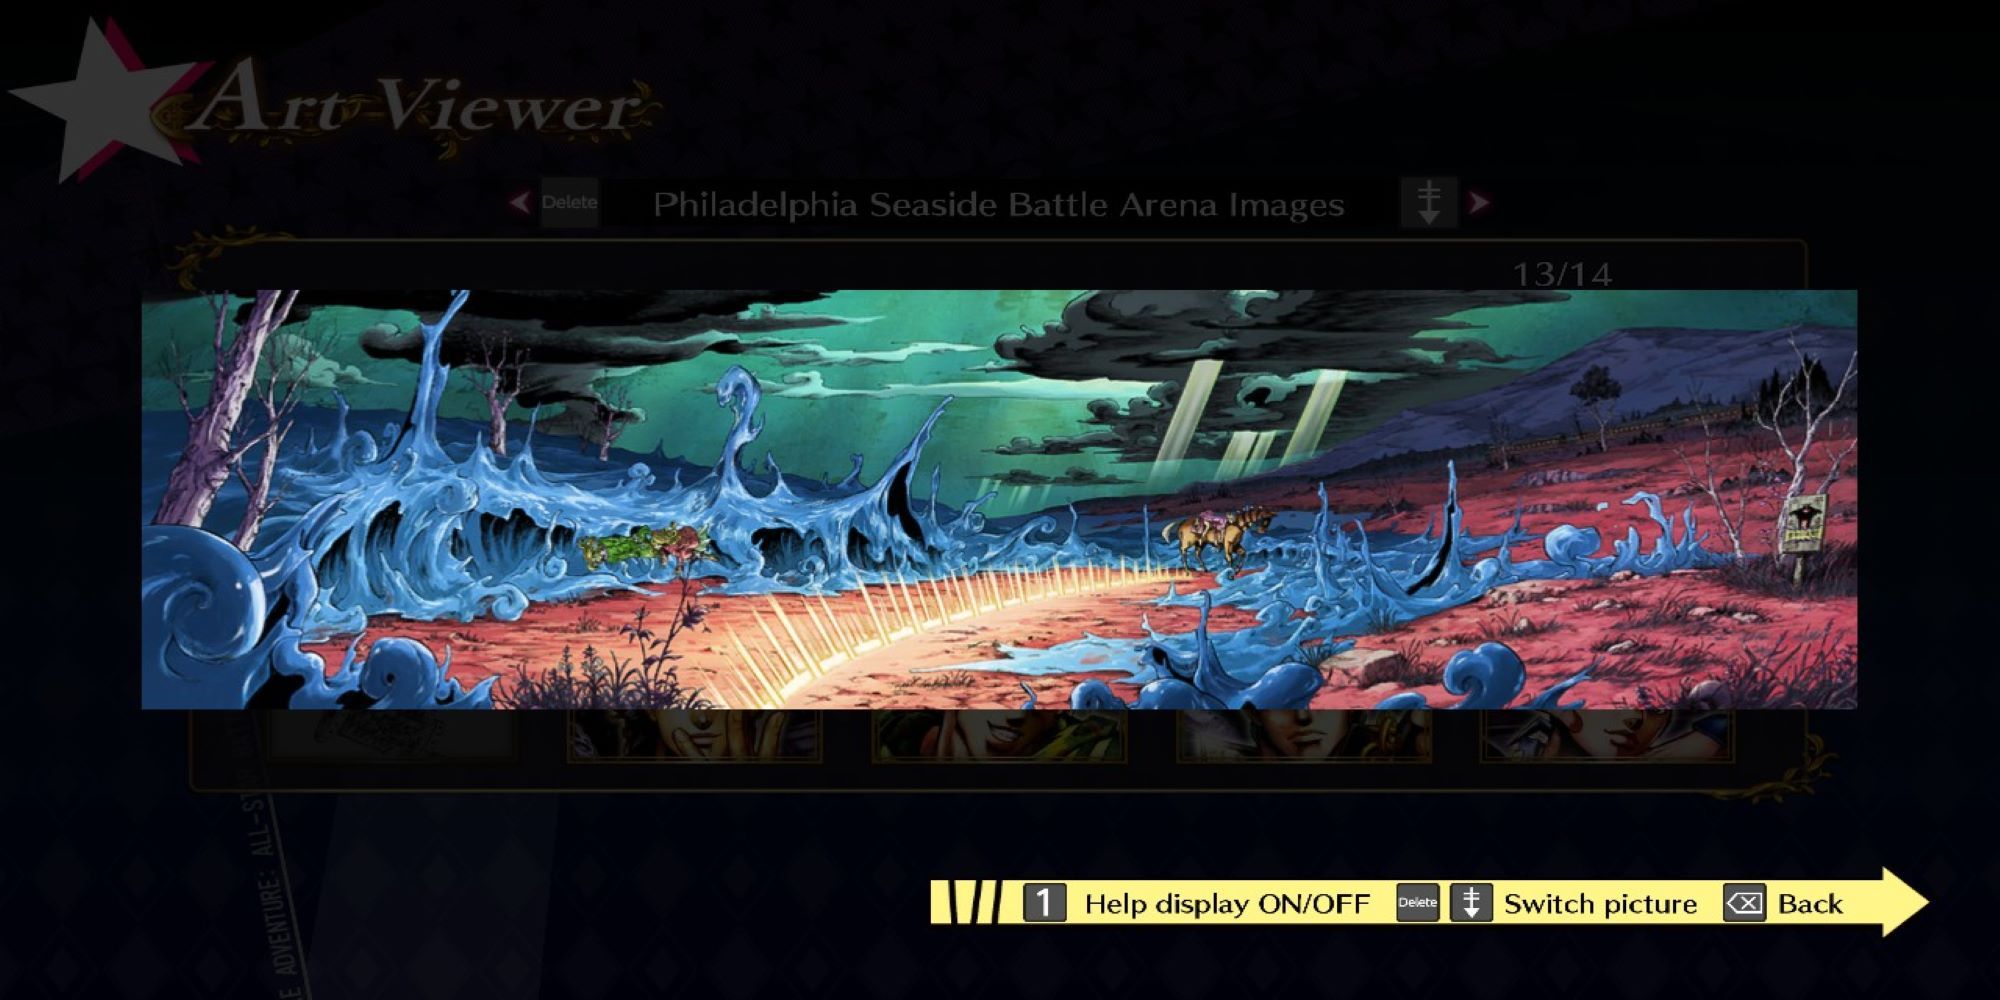 A piece of concept artwork for the Philadelphia Seaside arena in JoJo's Bizarre Adventure ASBR.